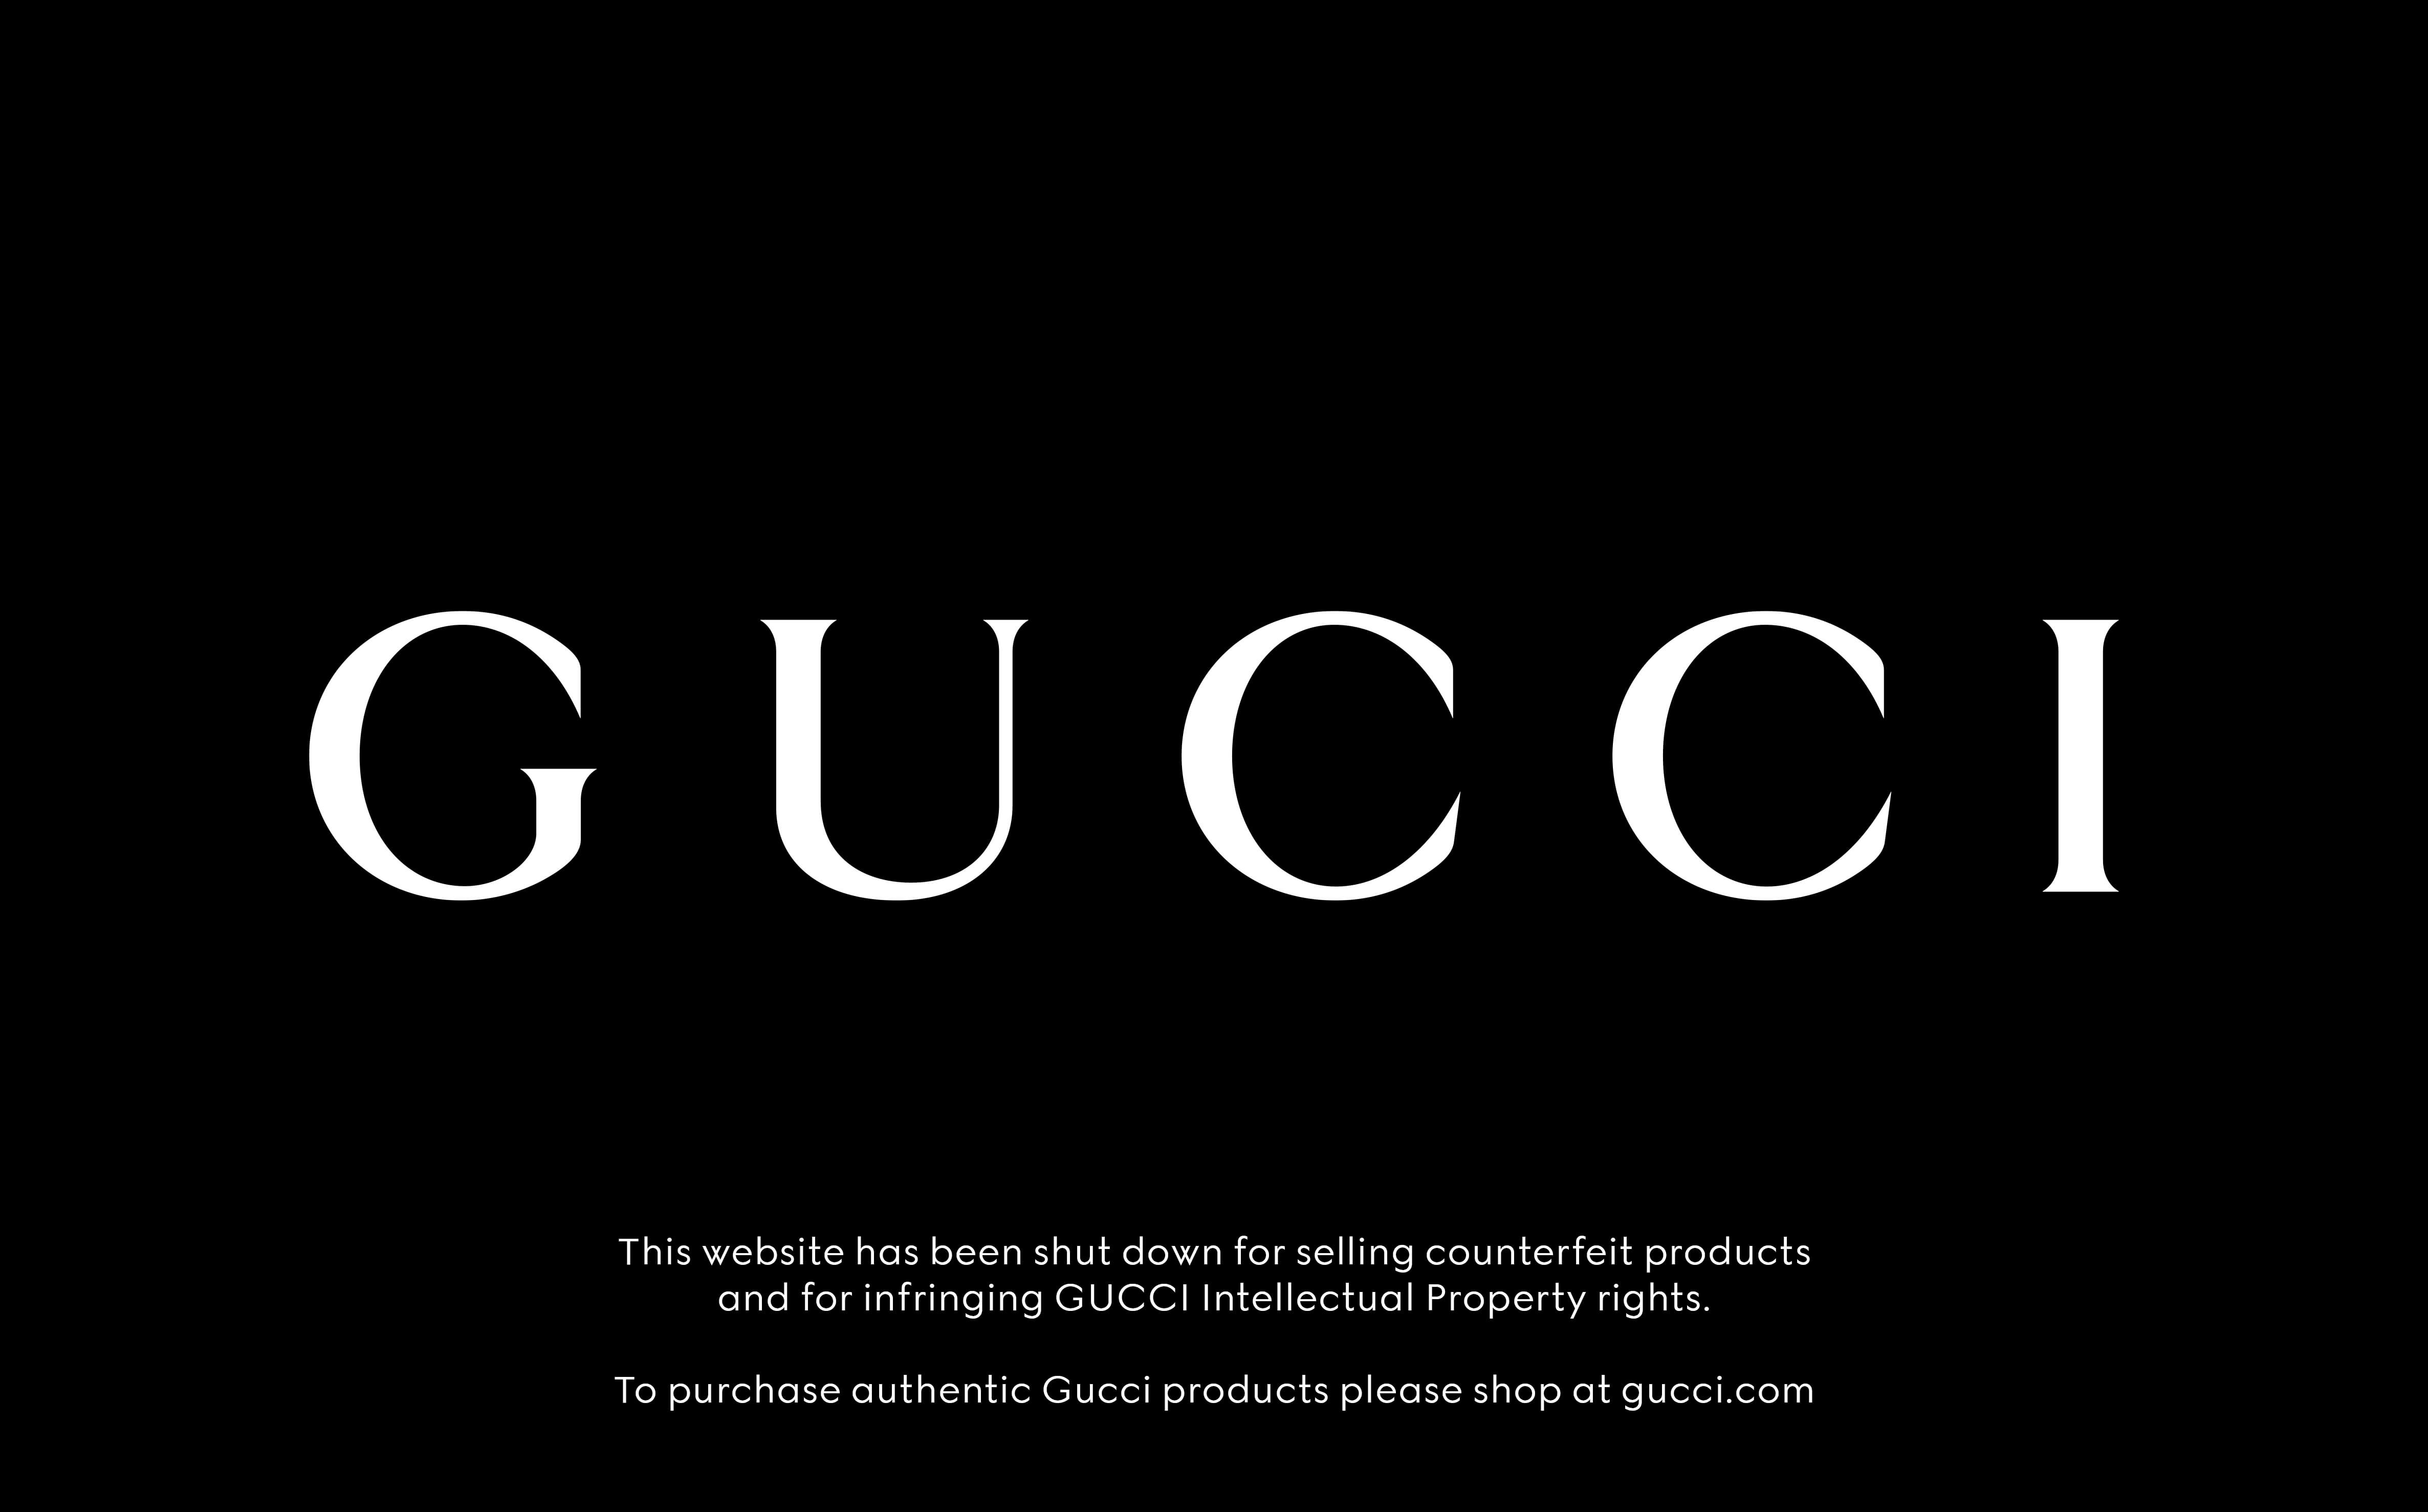 Guccio Gucci Warning